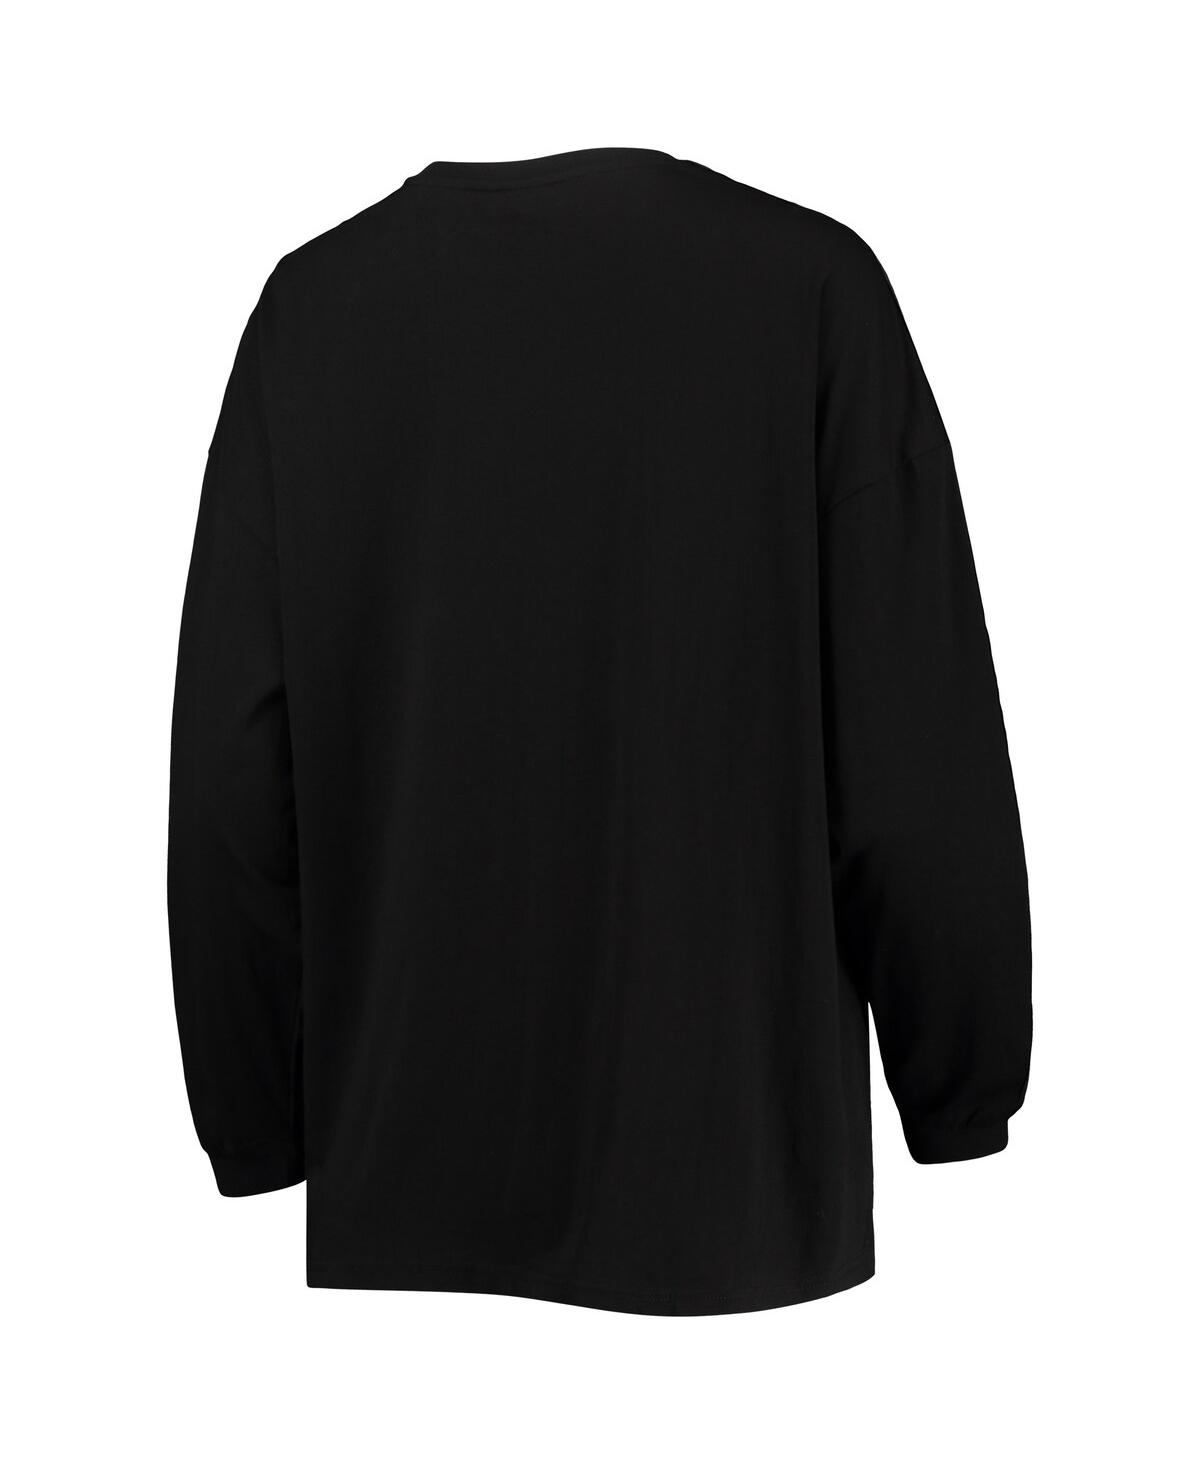 Shop The Wild Collective Women's  Black Chicago Fire Tri-blend Long Sleeve T-shirt